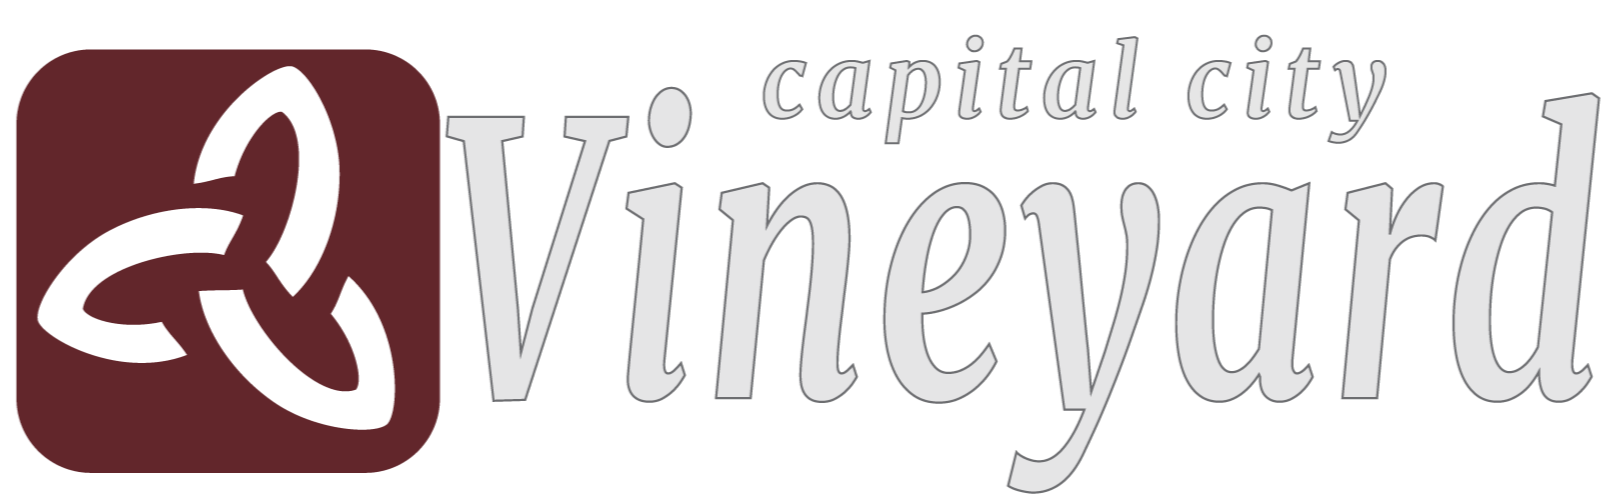 Capital City Vineyard Church Logo